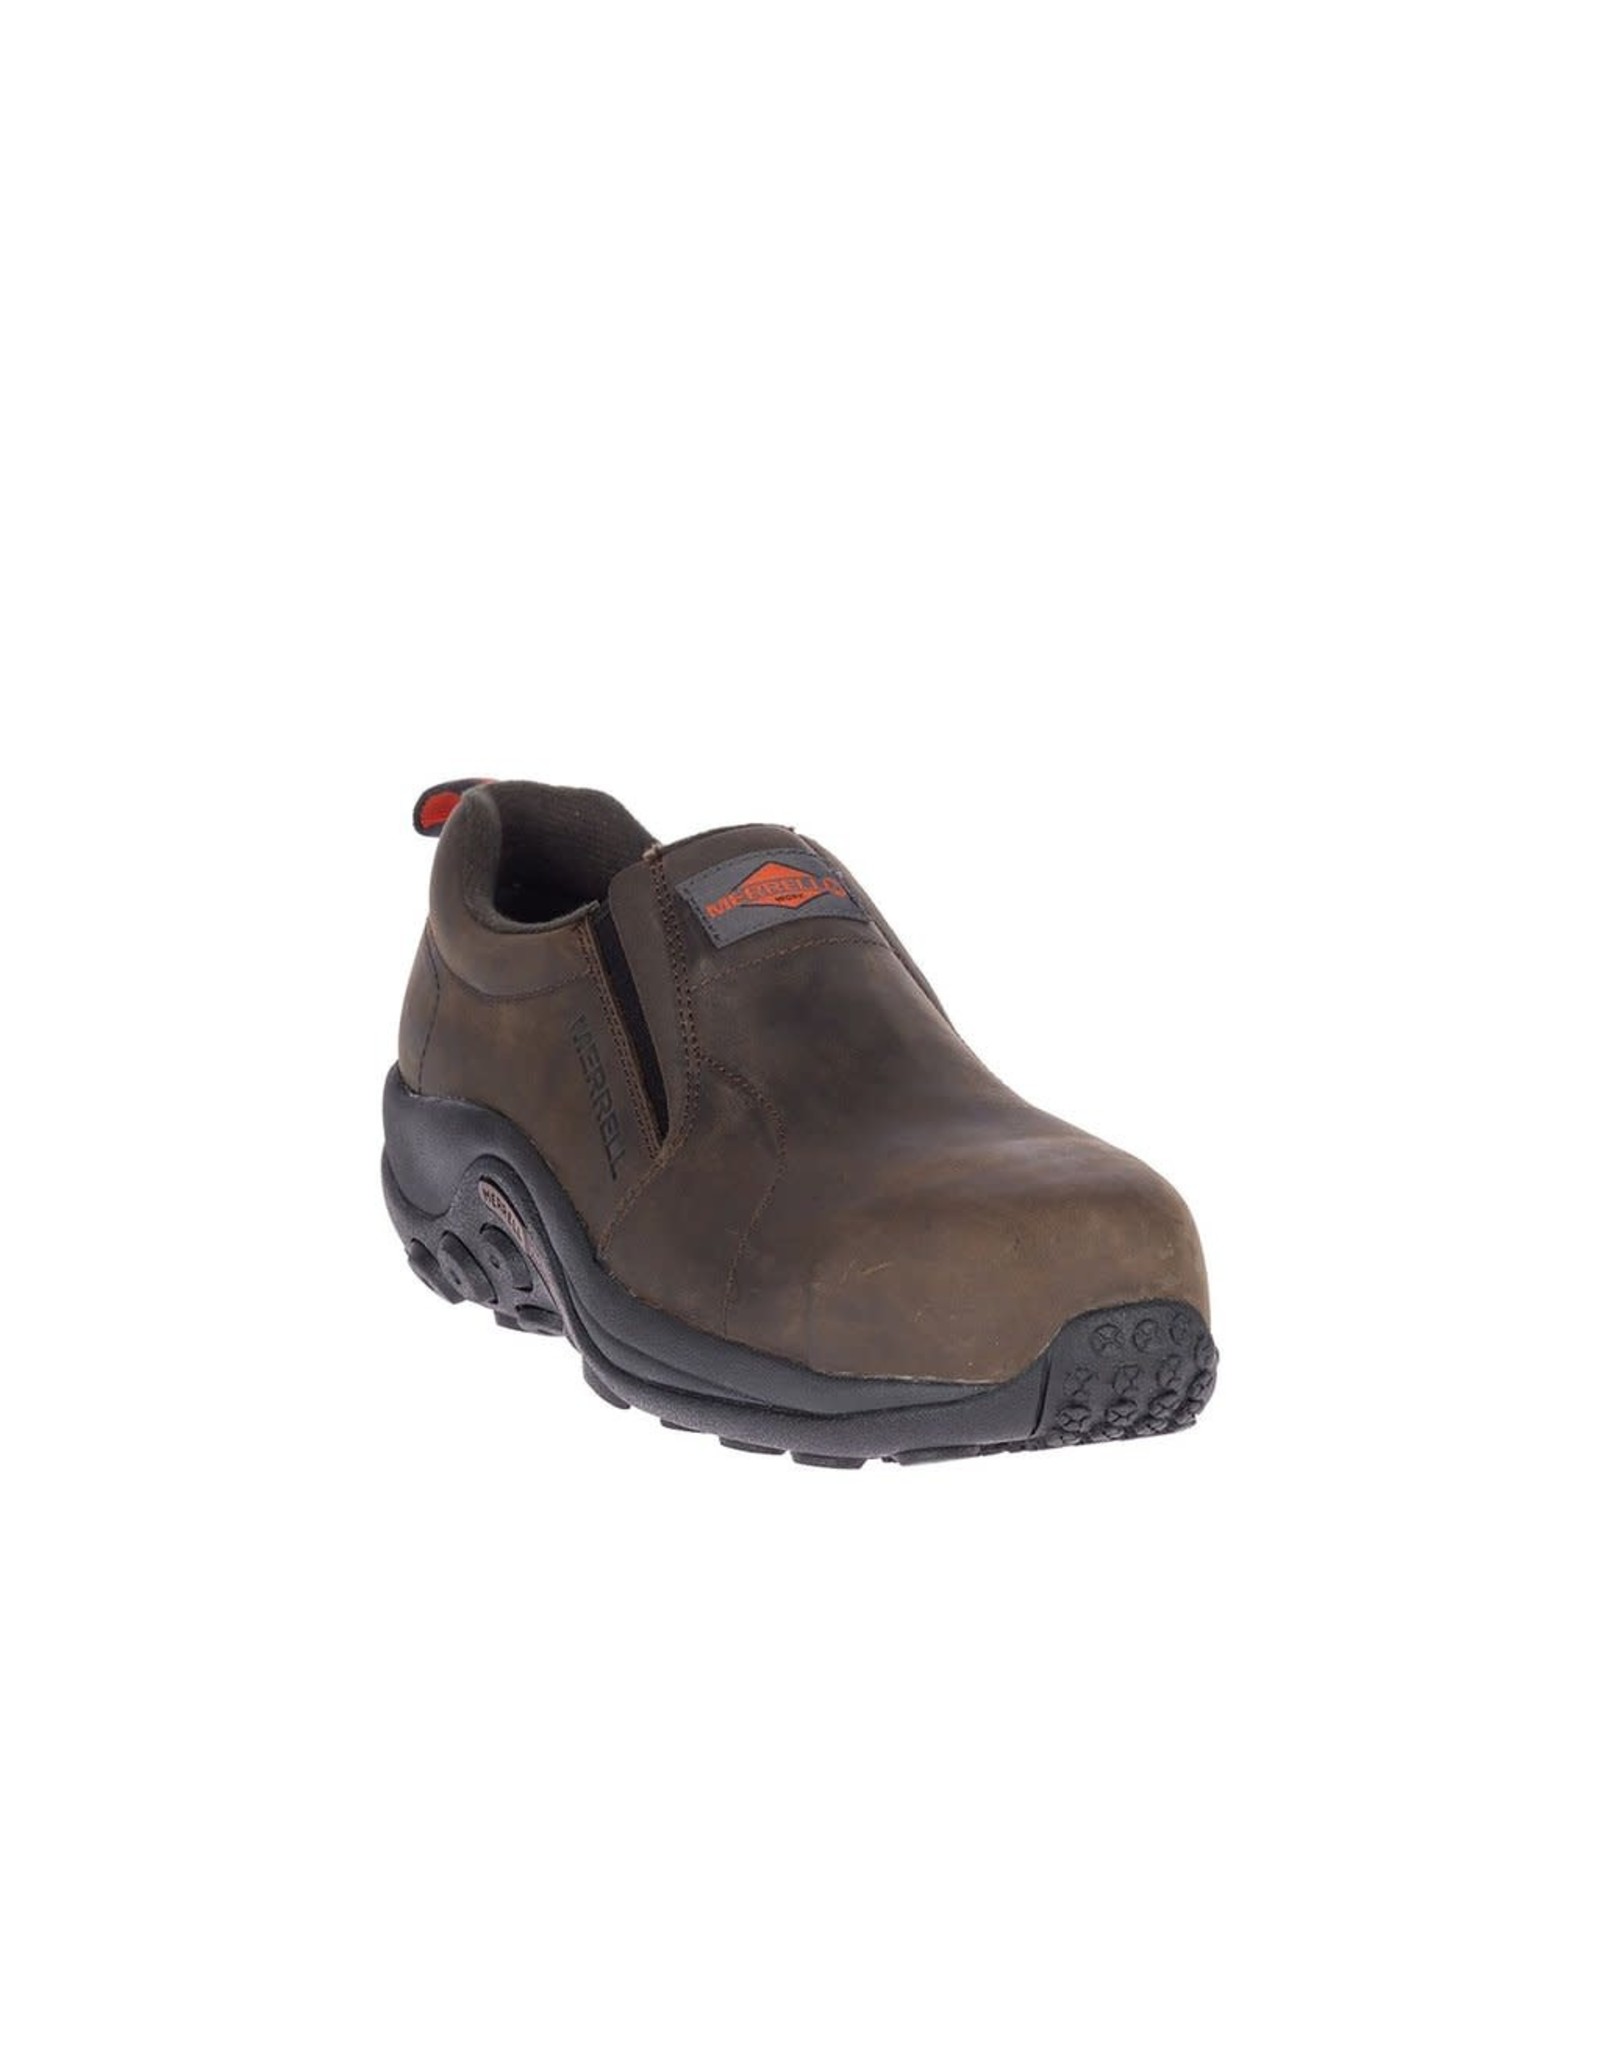 Merrell Men’s Jungle Moc LTR Composite Toe J099319 Work Shoes